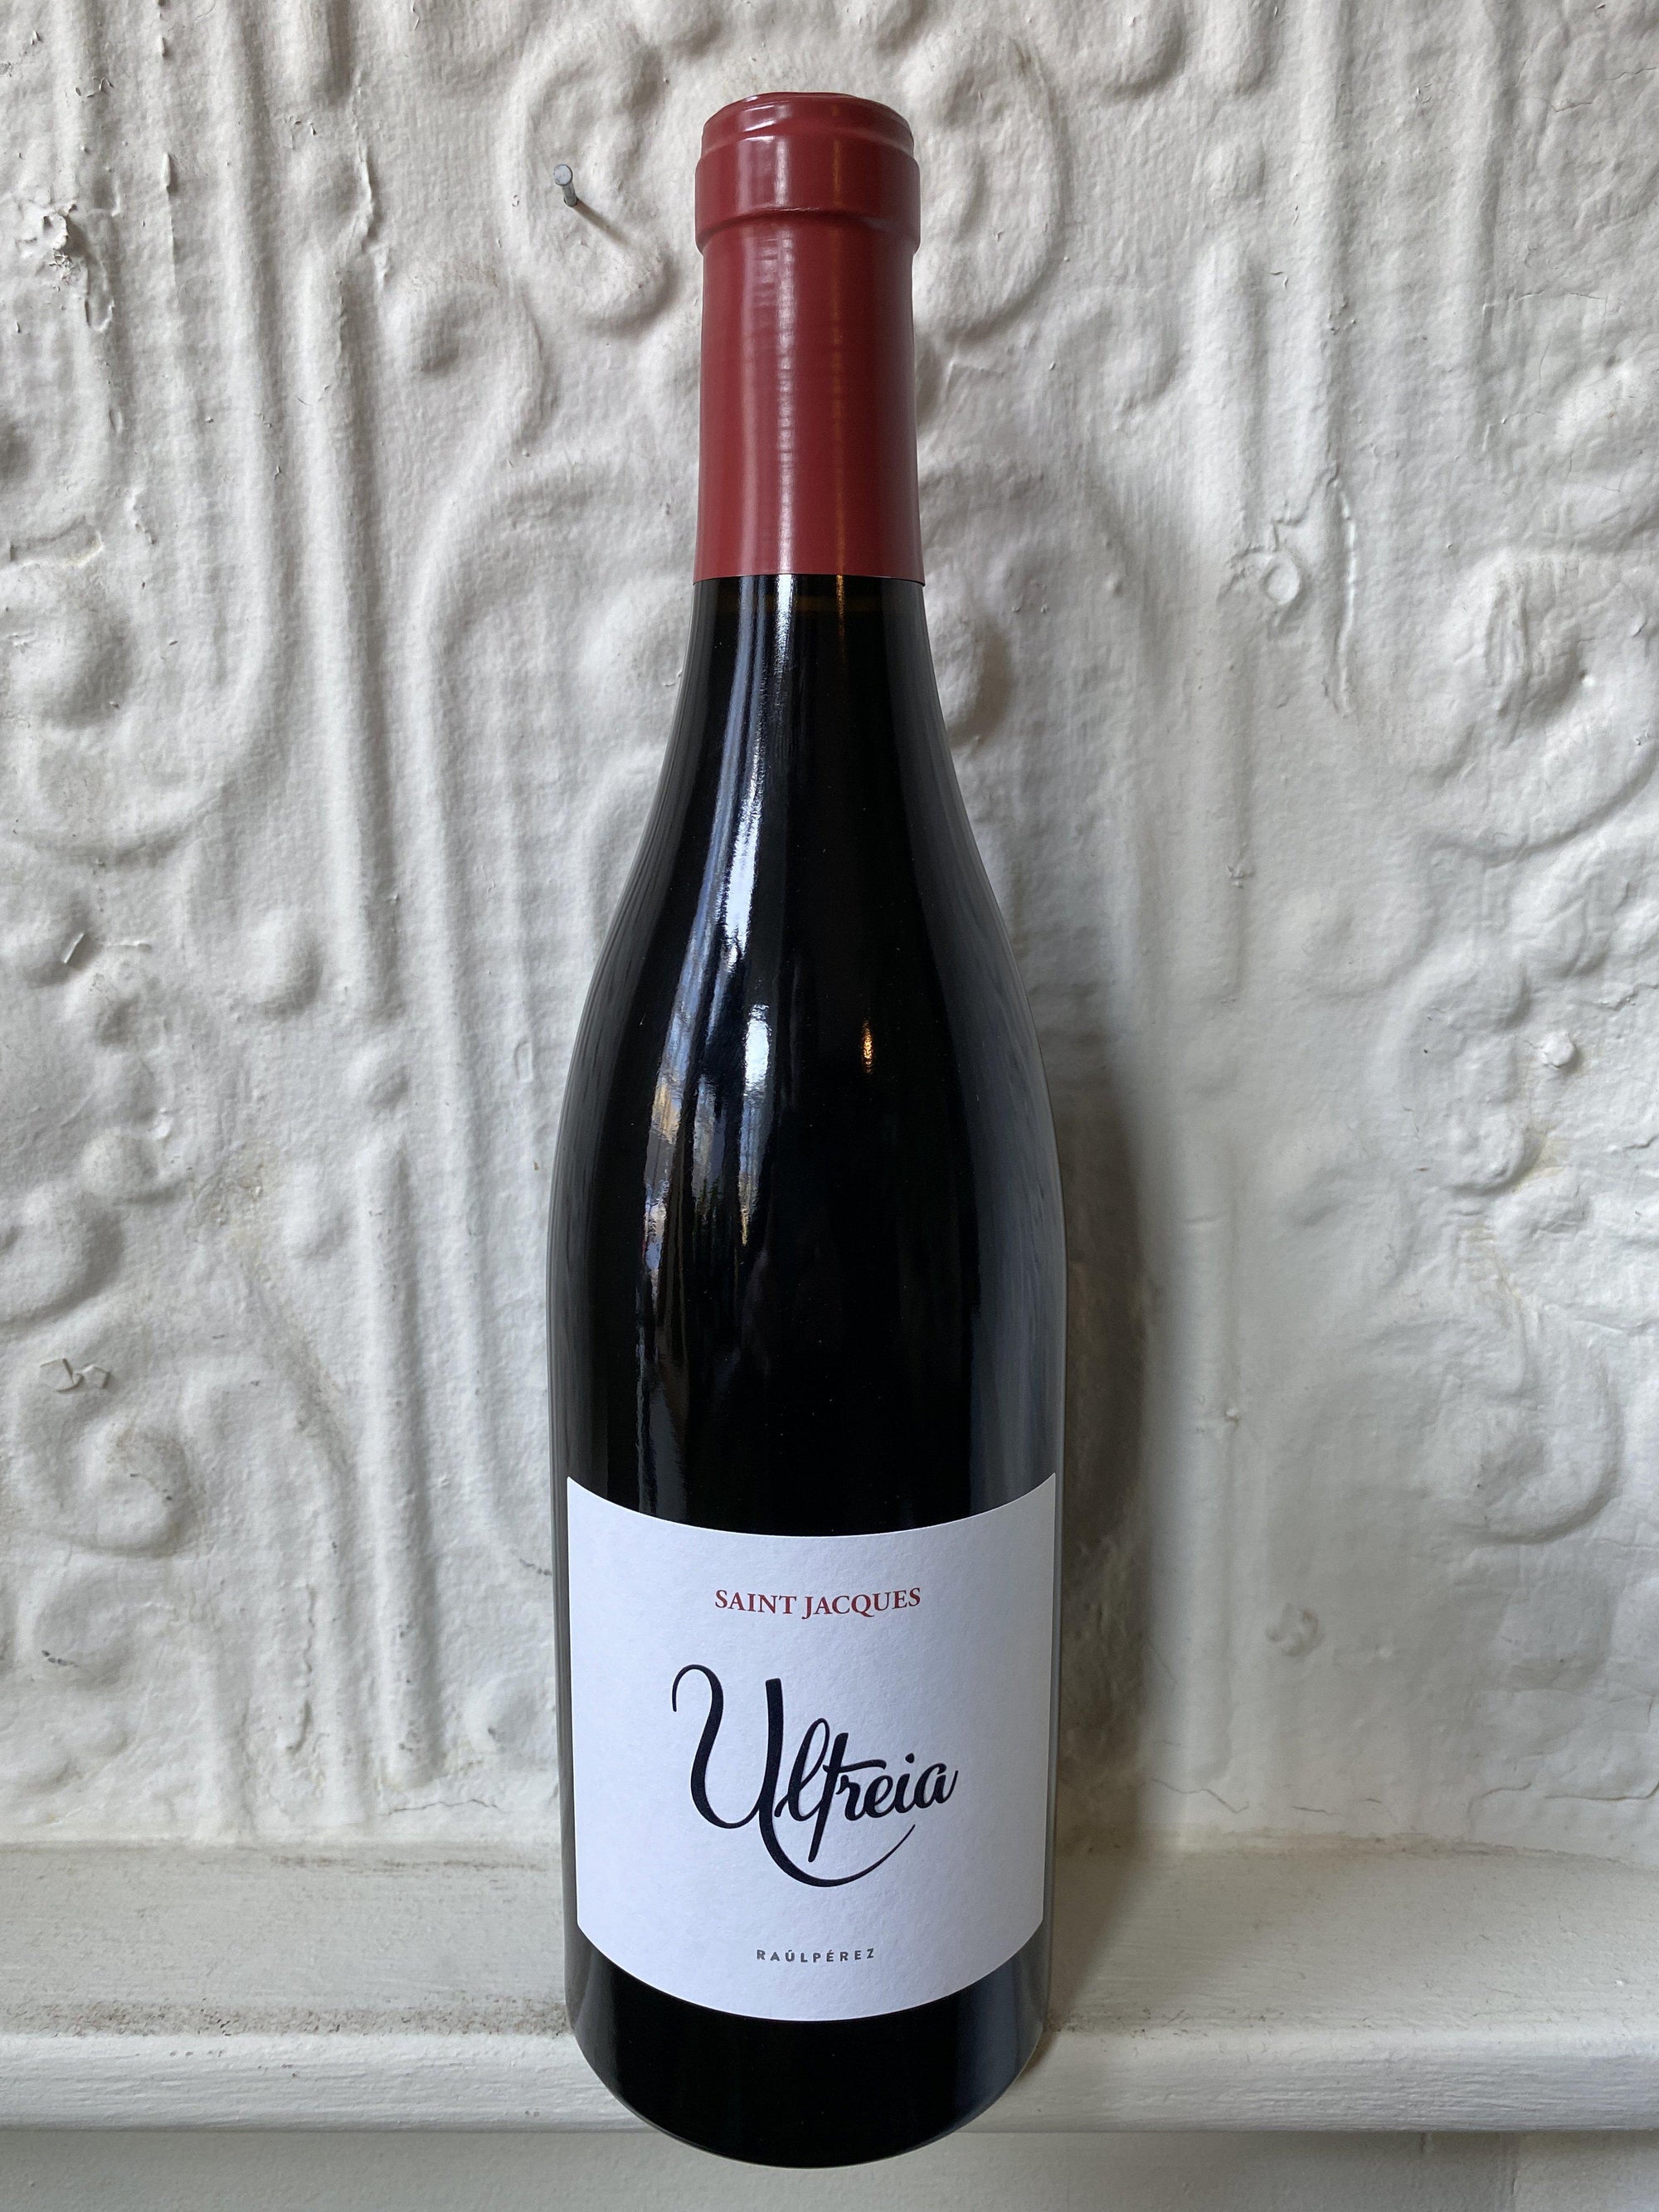 Bierzo Tinto "Ultreia St. Jacques", Raul Perez 2018 (Galicia, Spain)-Wine-Bibber & Bell